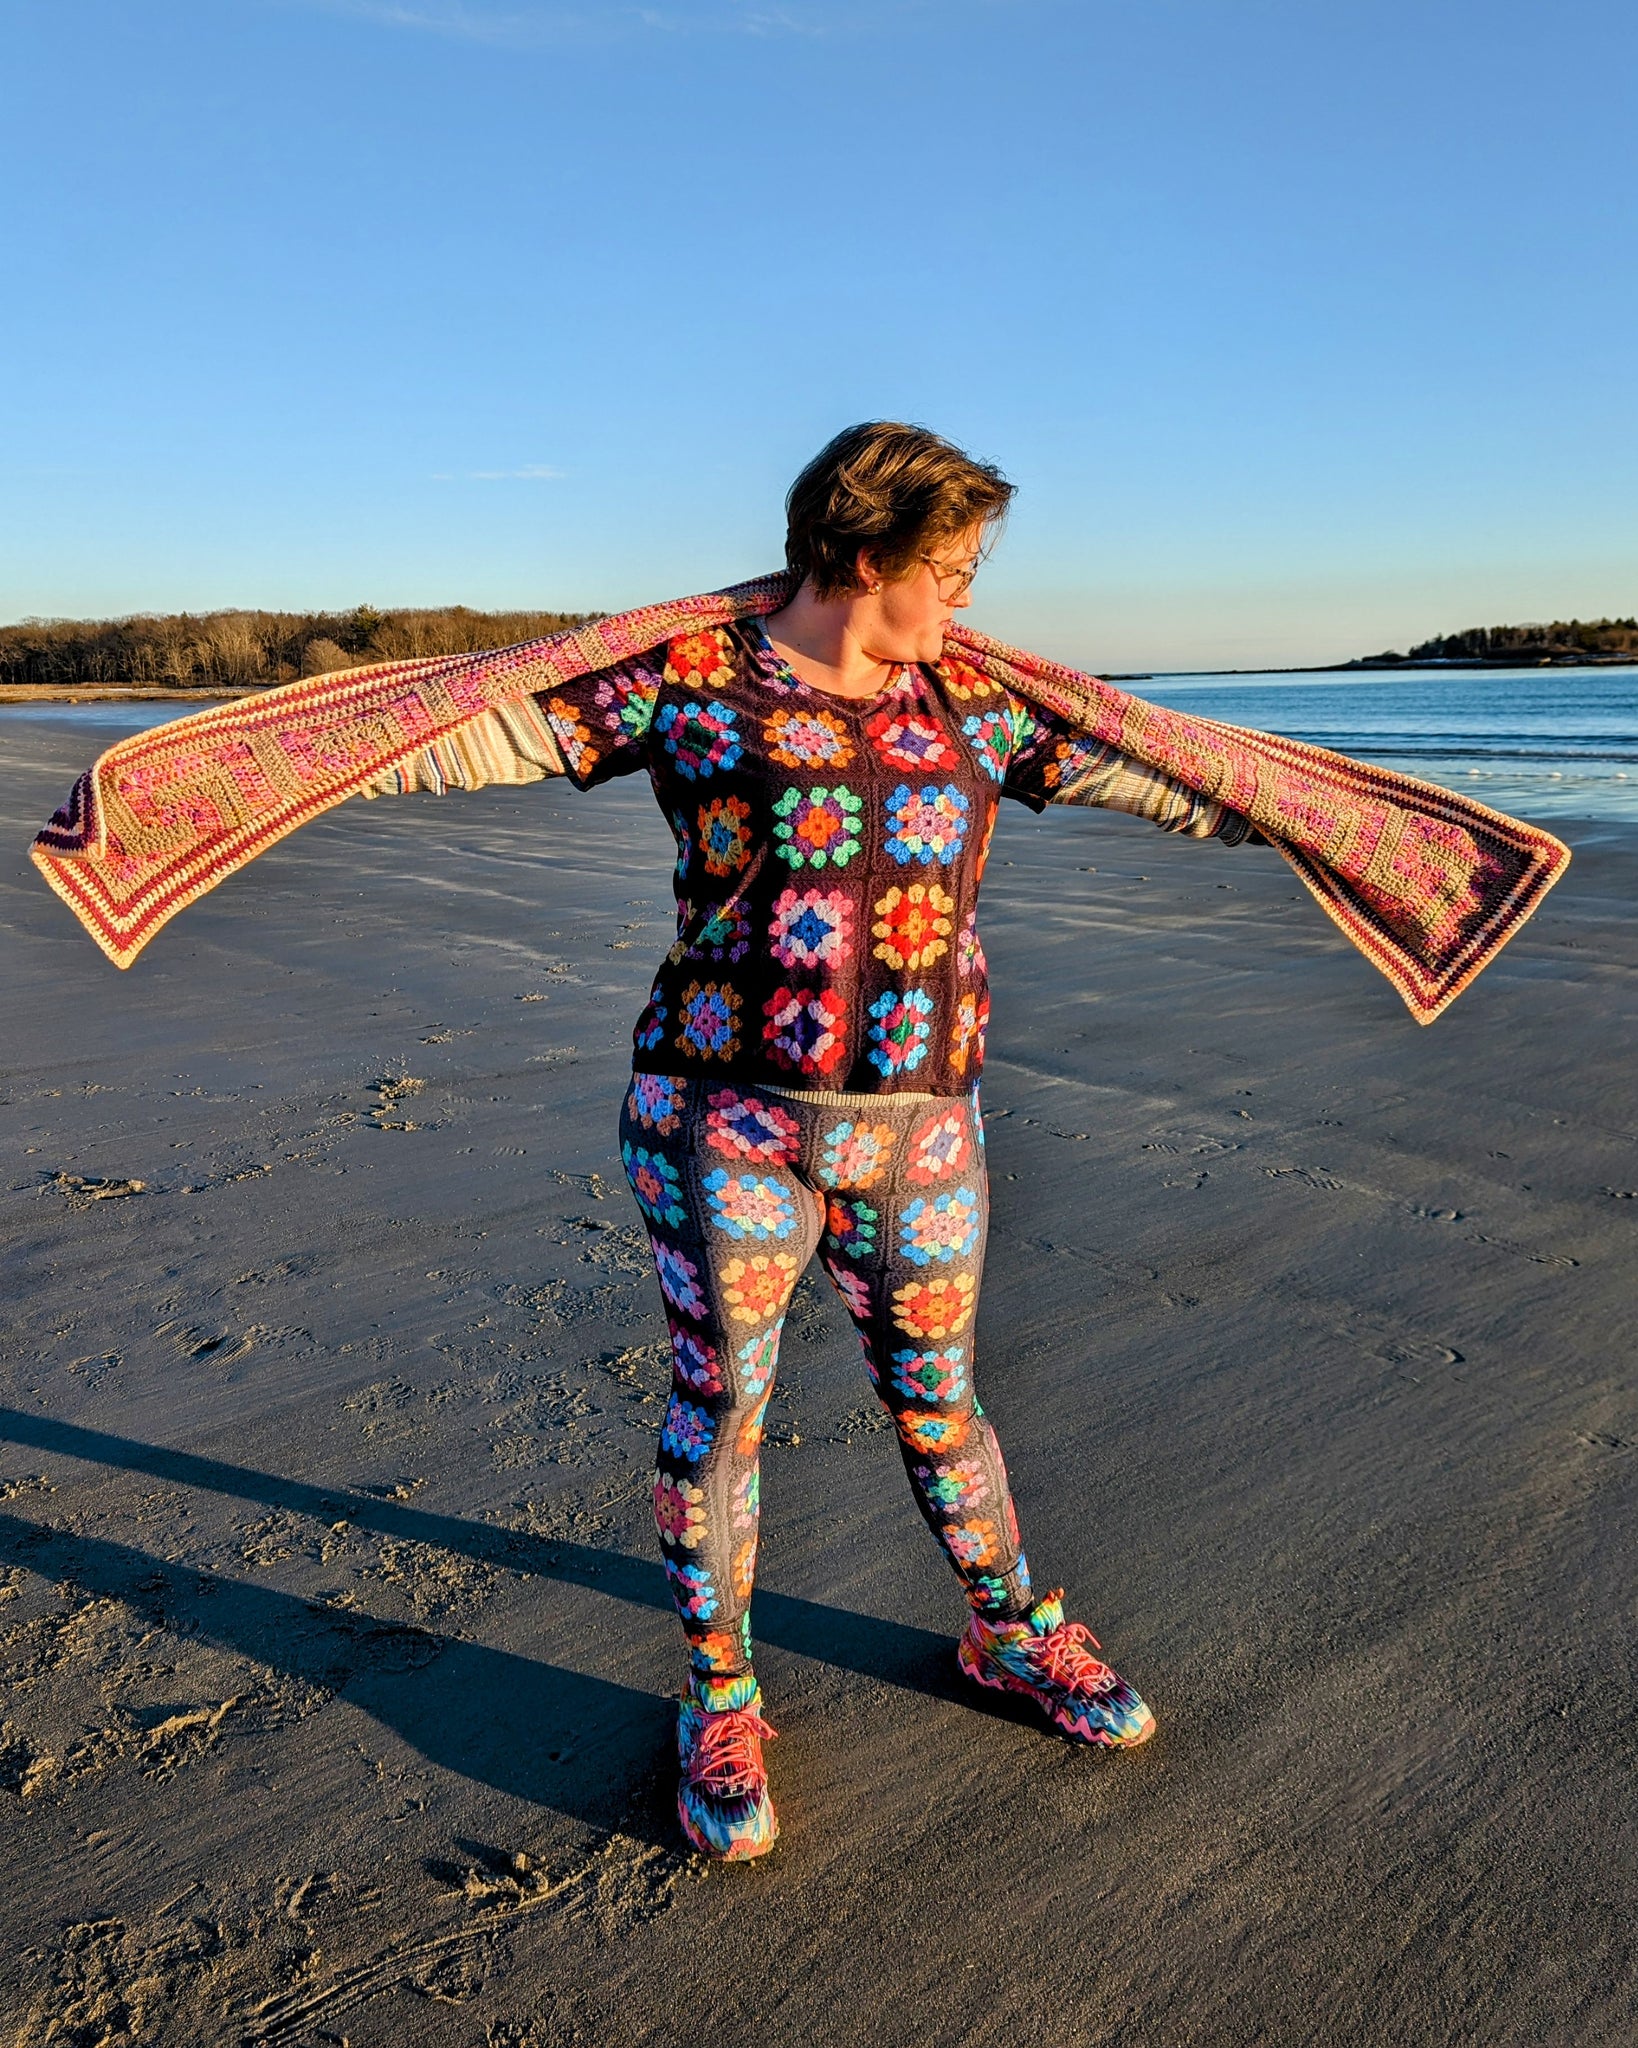 'Meandros' Pocket Scarf Downloadable Crochet Pattern